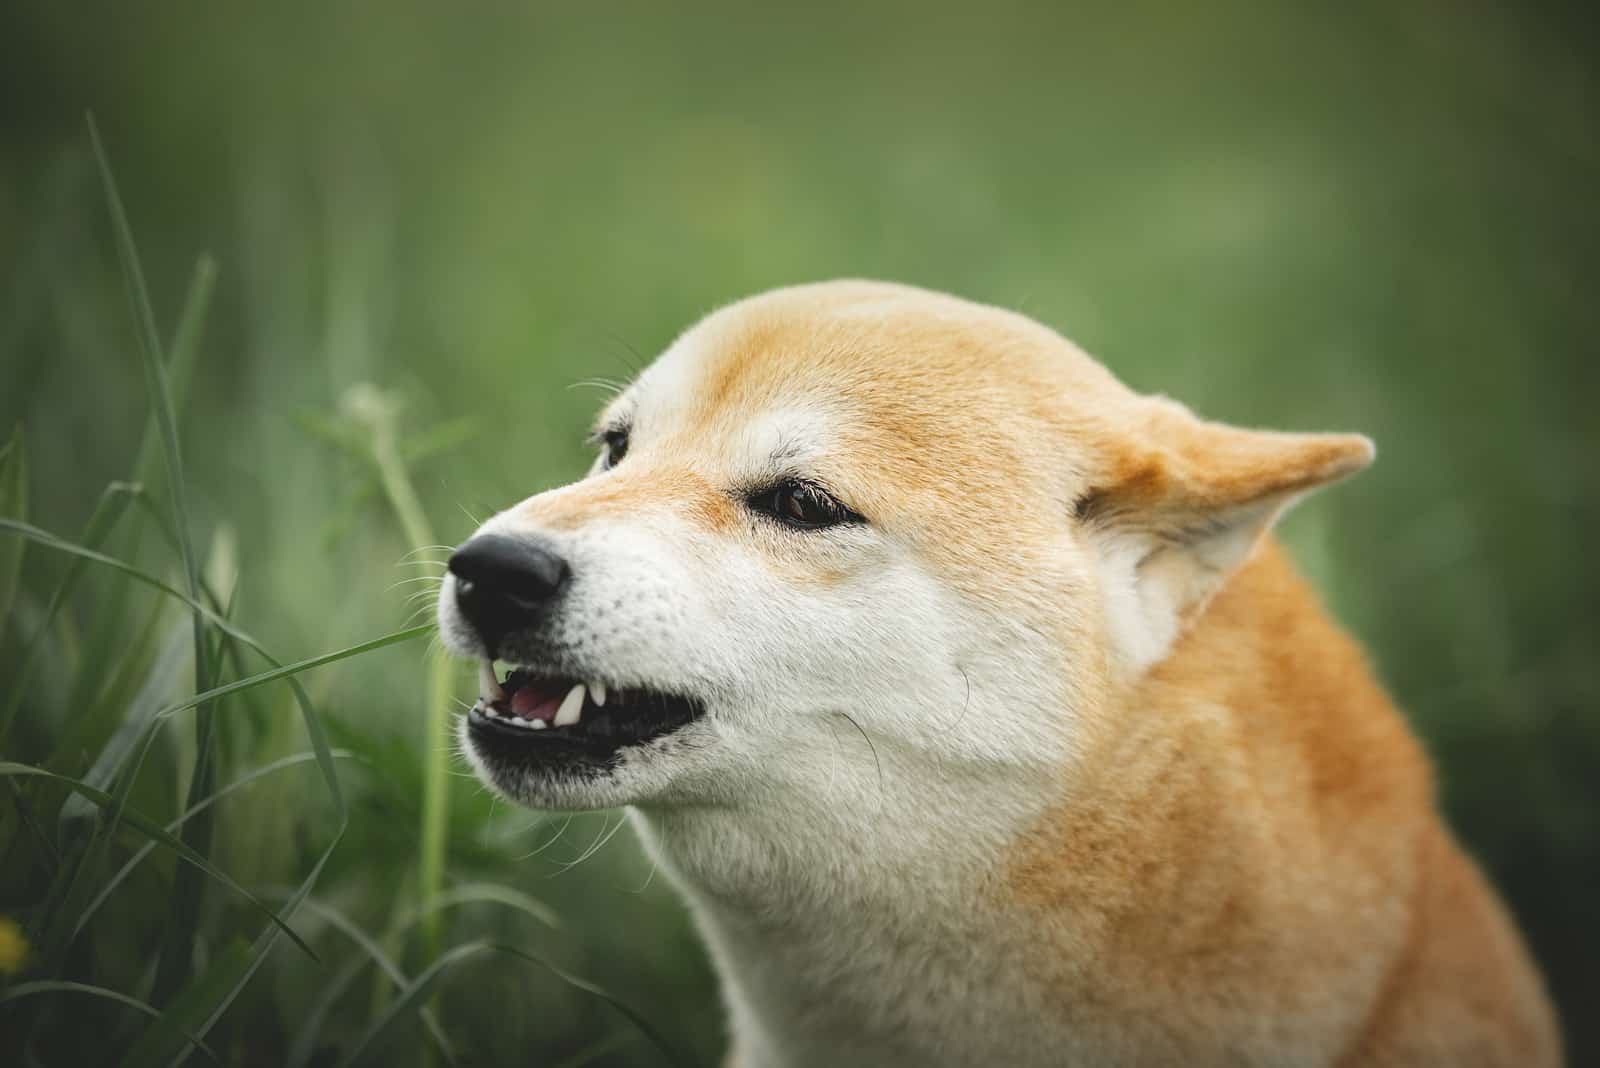 roaring shiba inu dog in the green grass